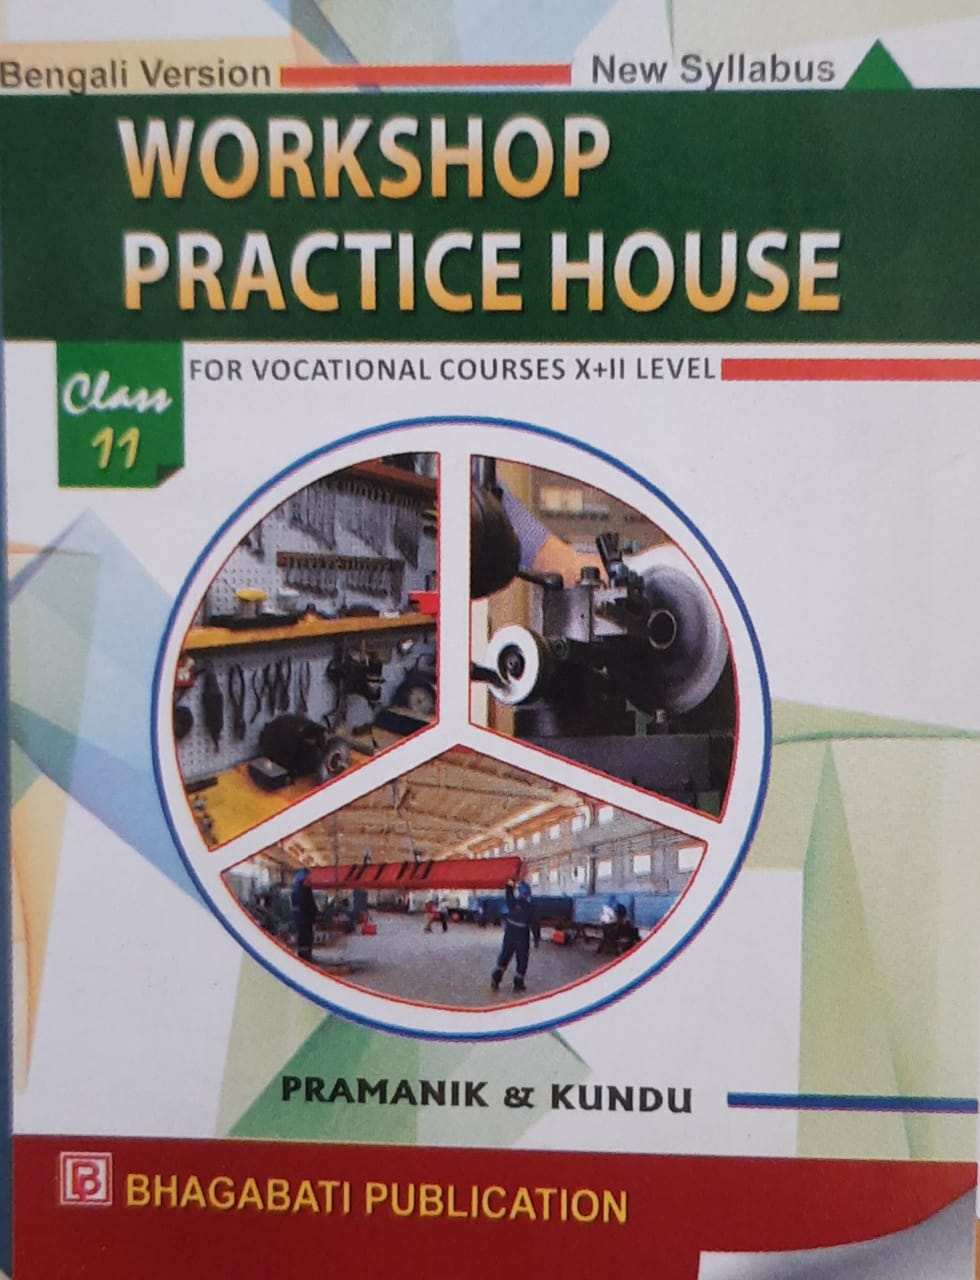 workshop practice house new syllabus bengali version